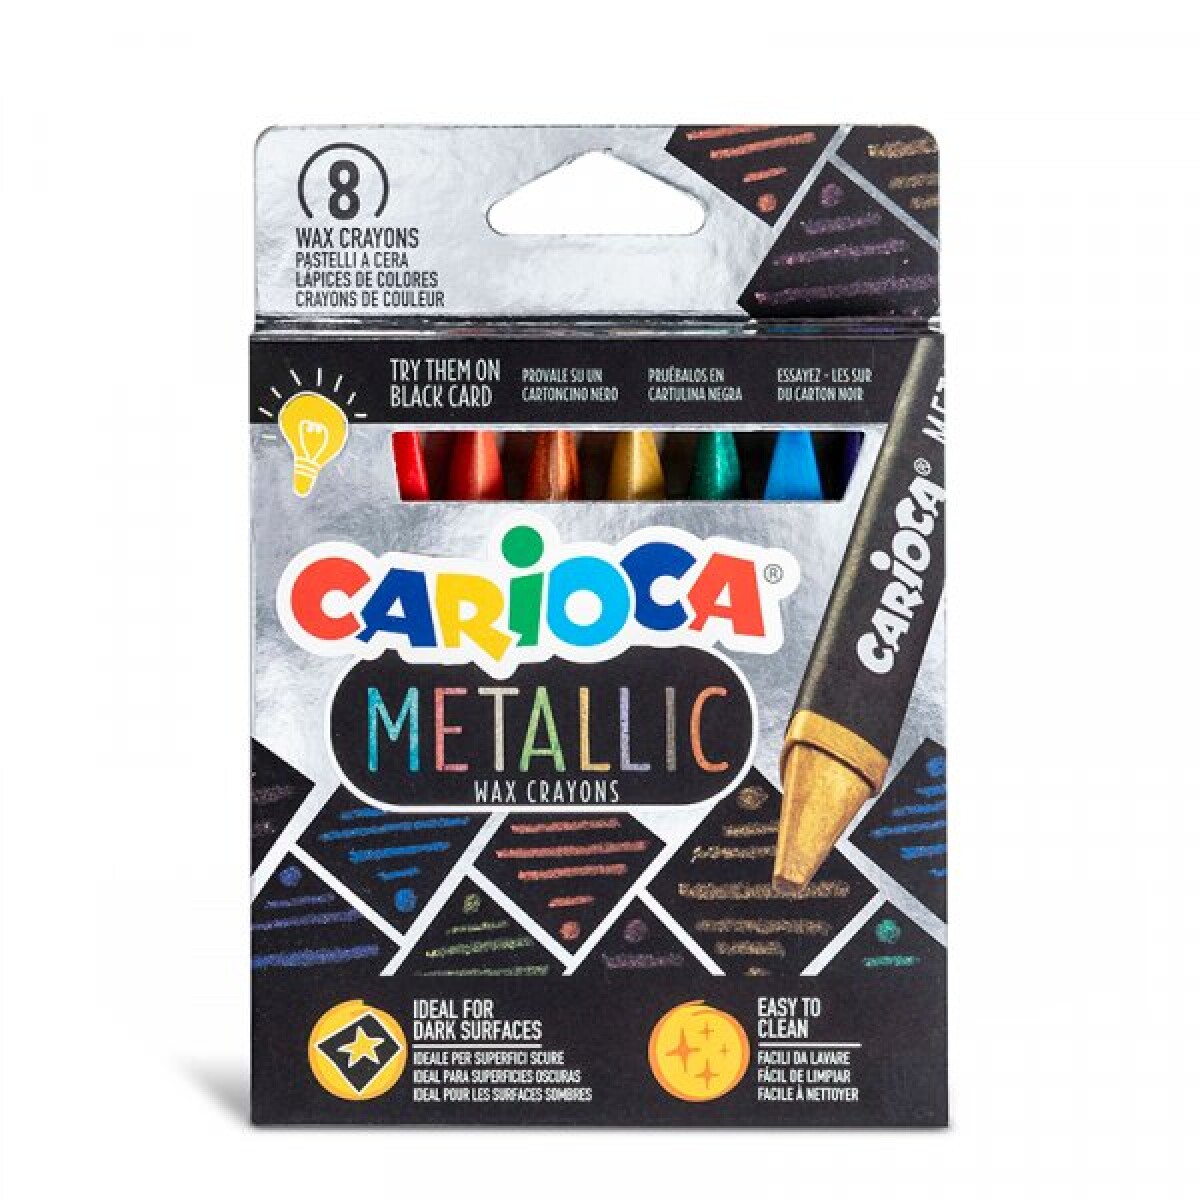 Crayola Carioca Metallic x8 